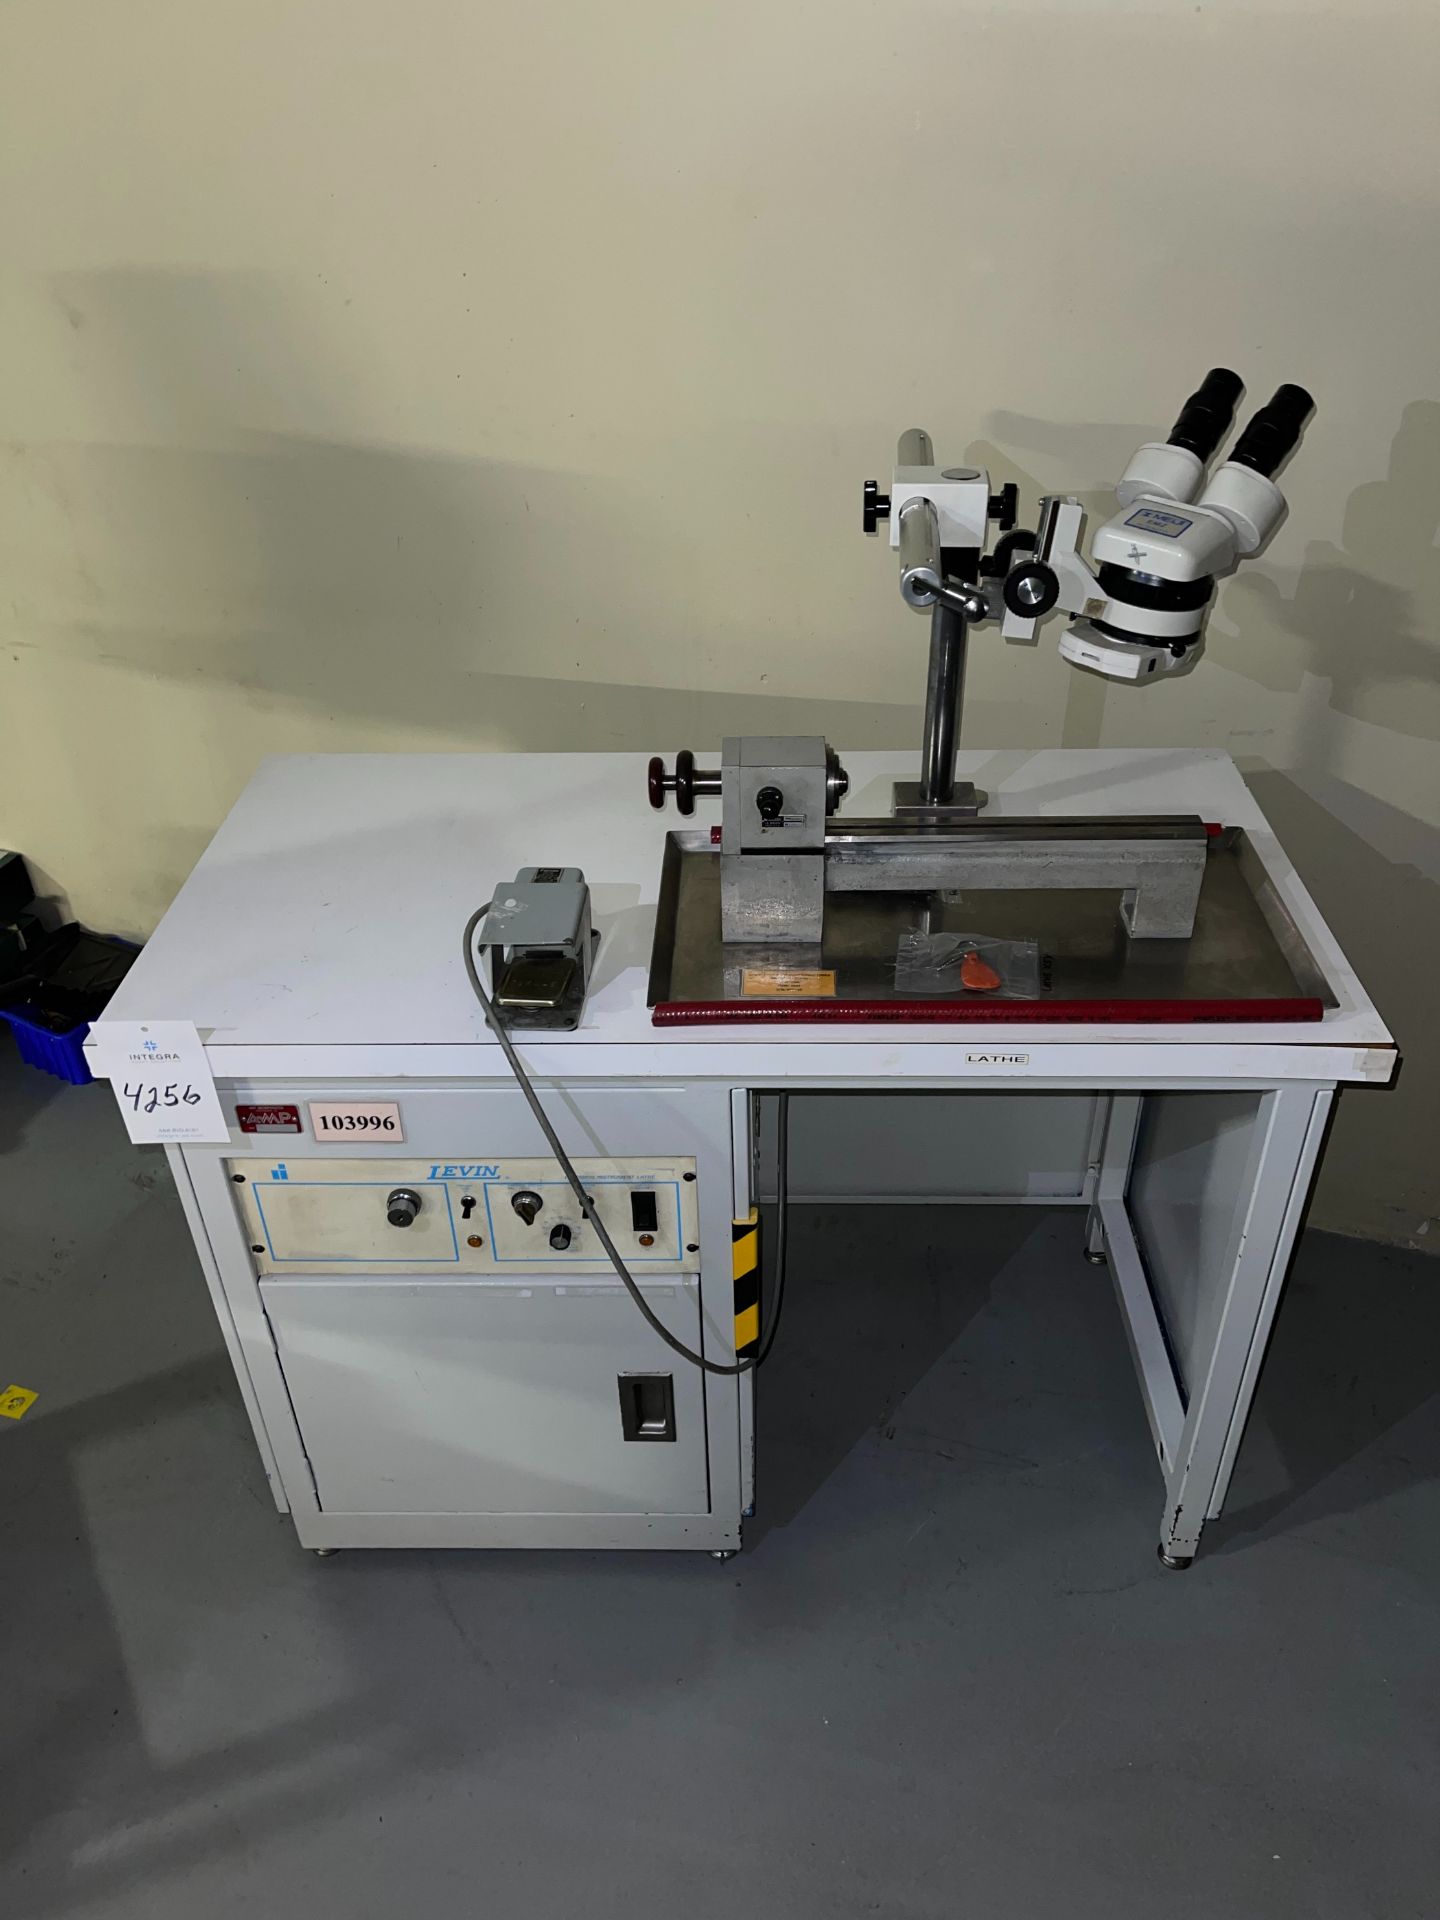 Levin 2223-02 Precision Instrument Lathe Table with Meiji EMZ Stereo Microscope, Zoom Range: 0.7X -